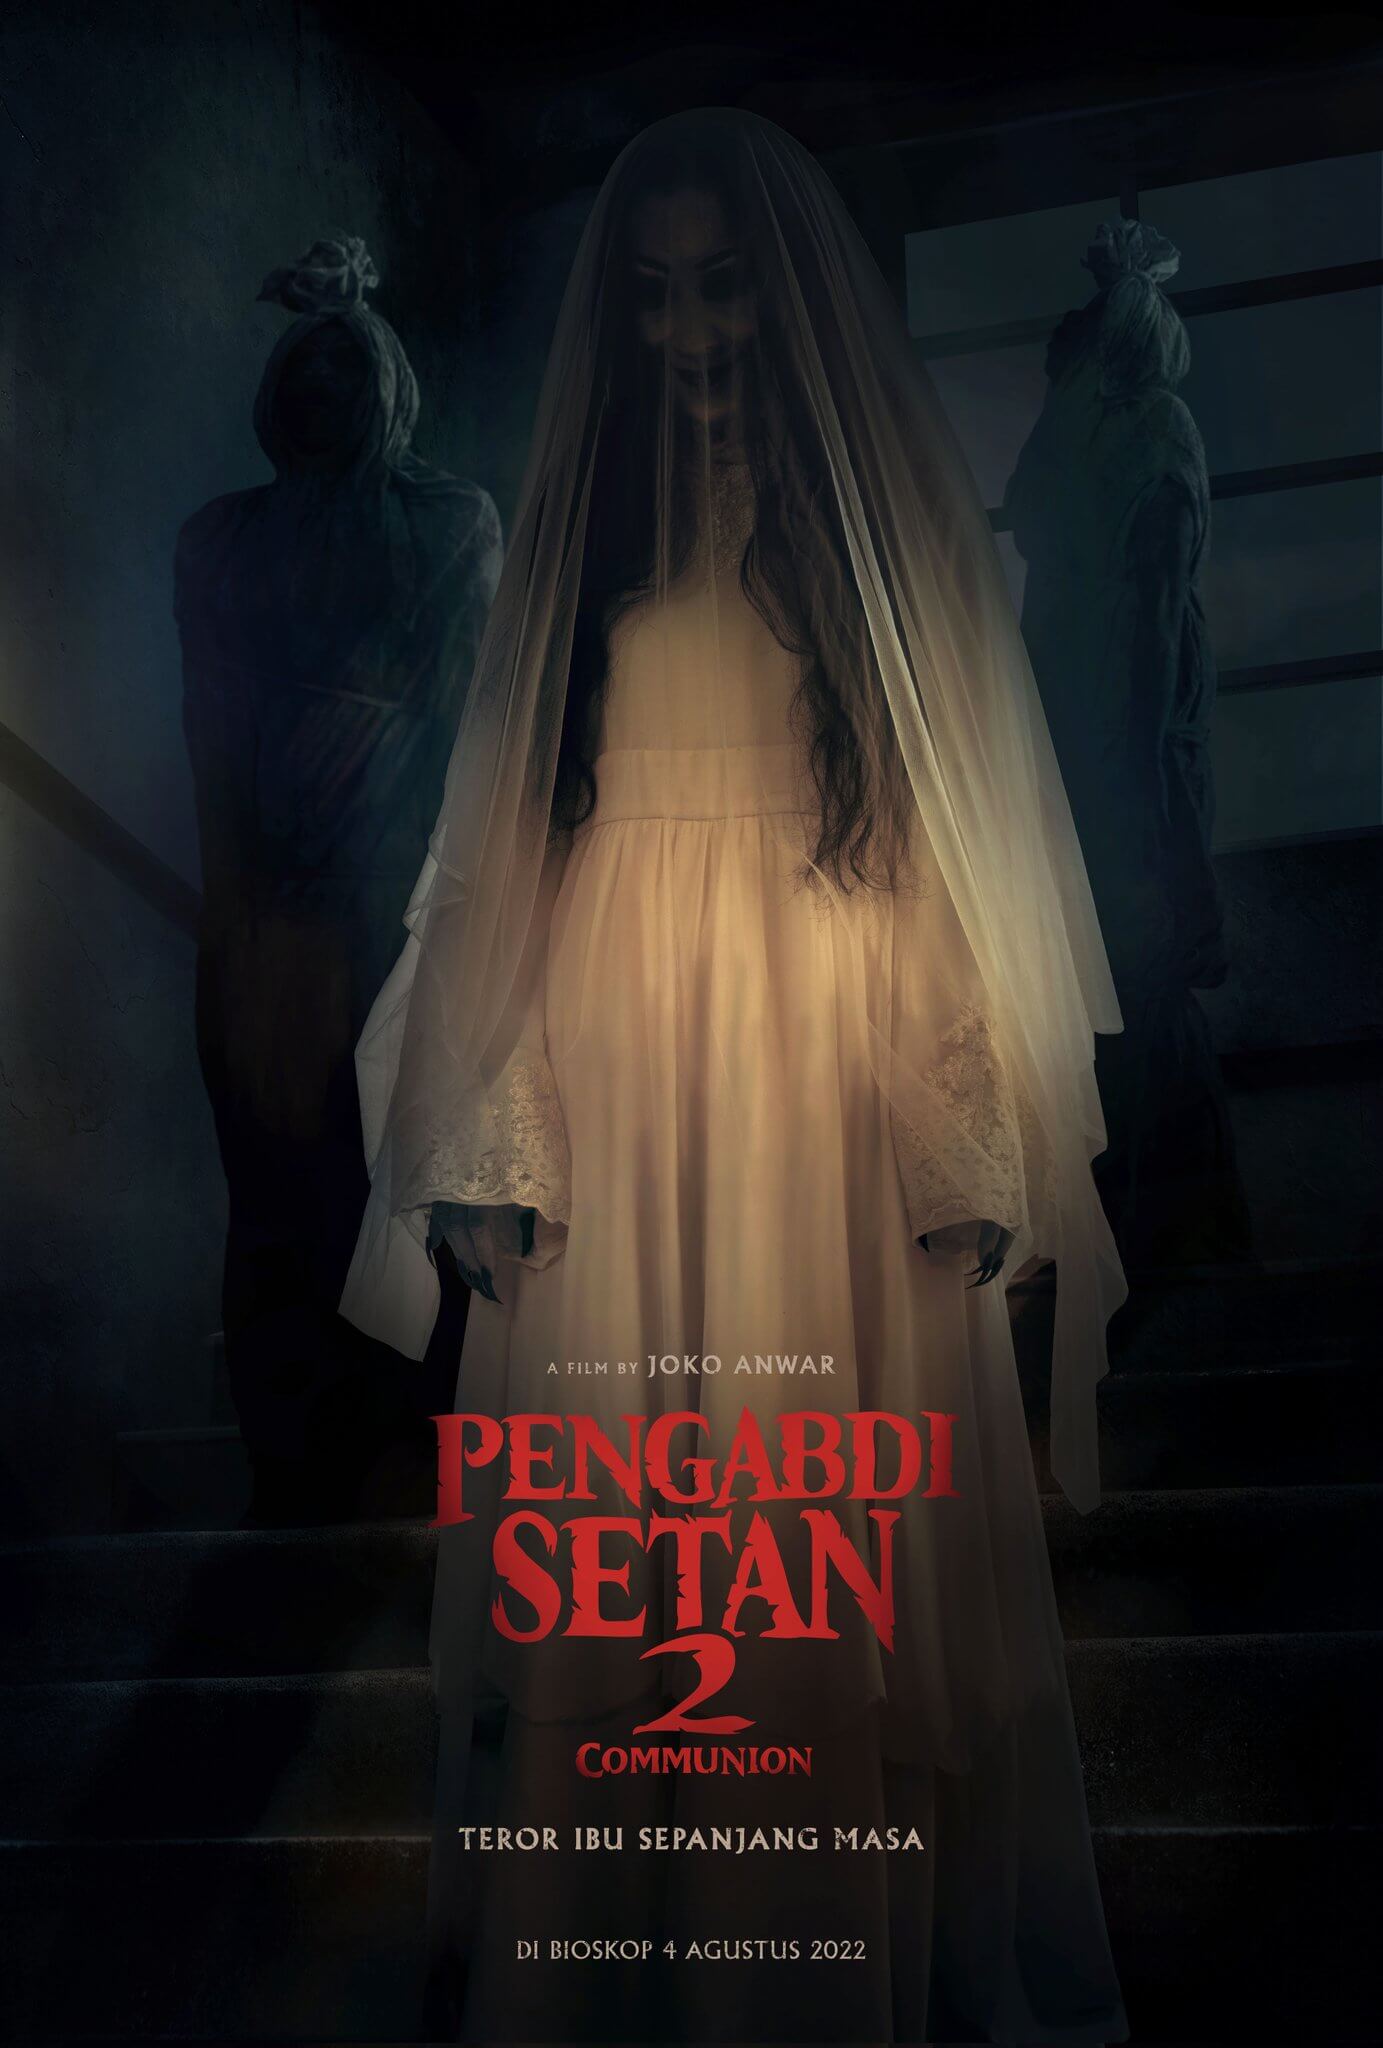 Satan's Slaves 2 Communion Movie Poster